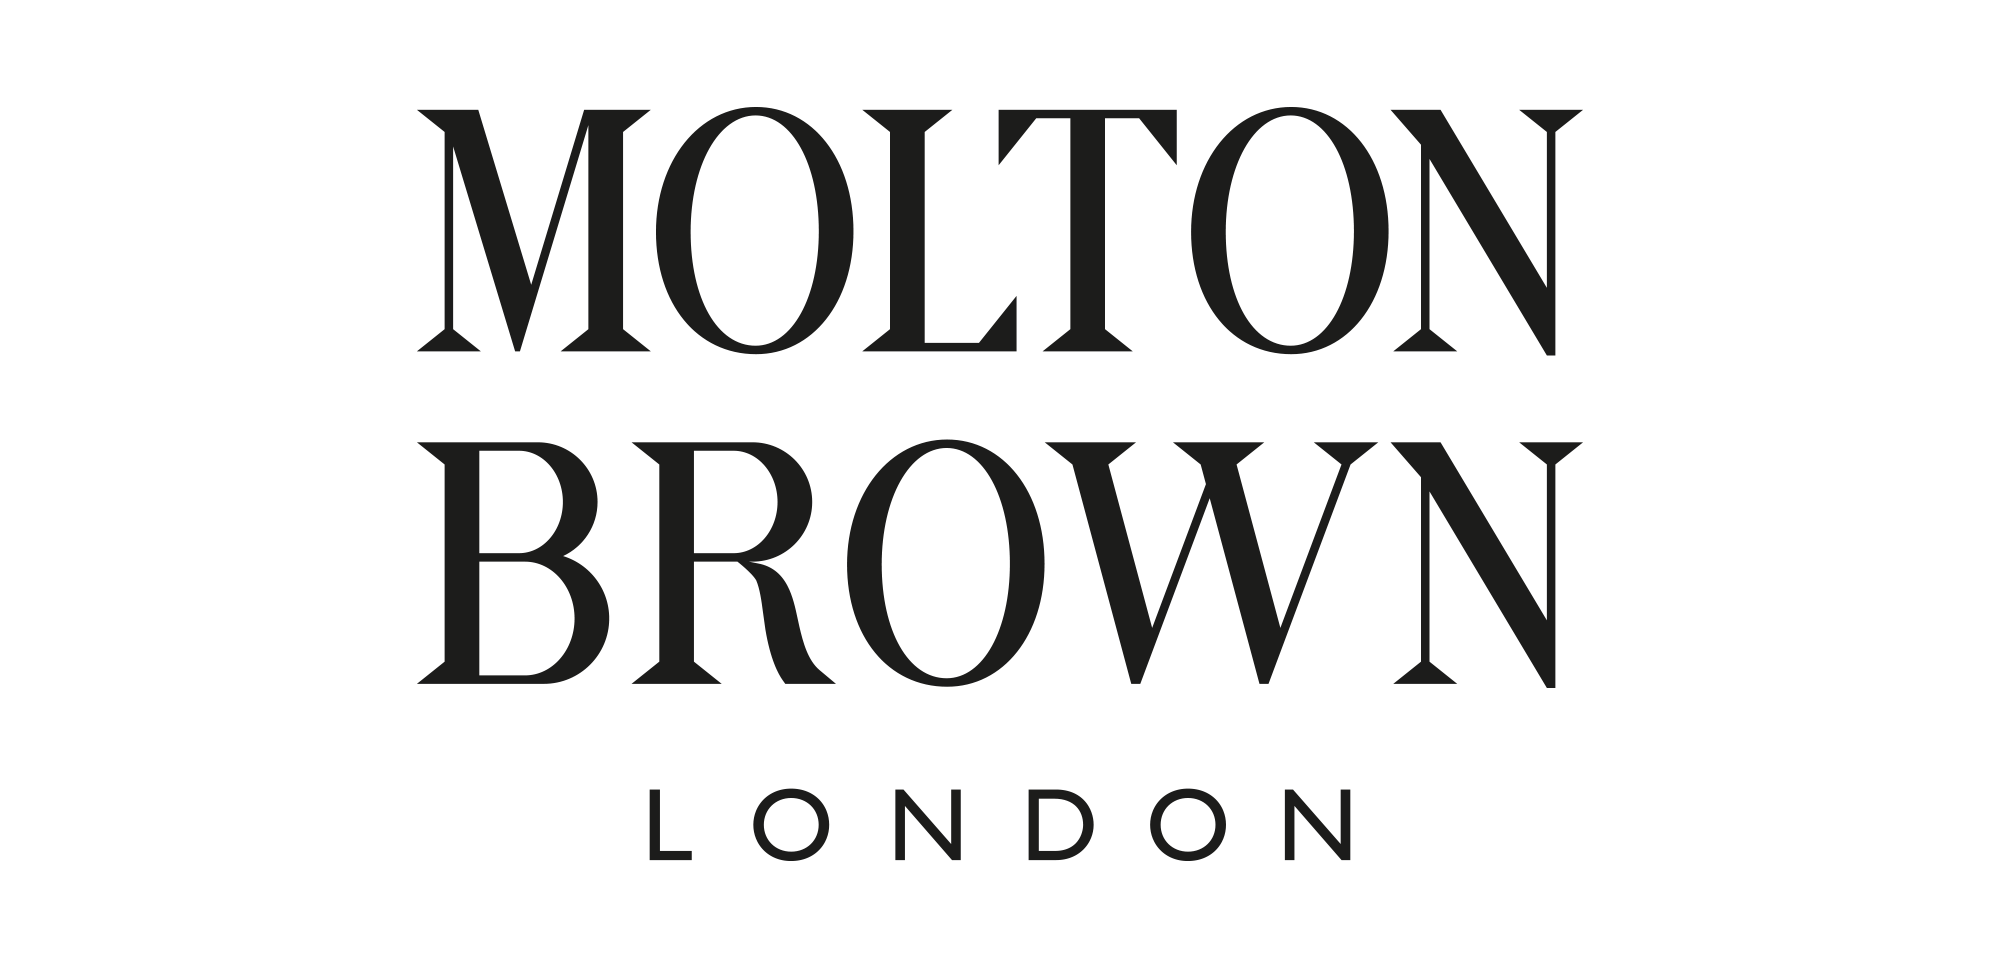 Molton Brown – Milk Musk – Gel doccia - Danae Profumeria